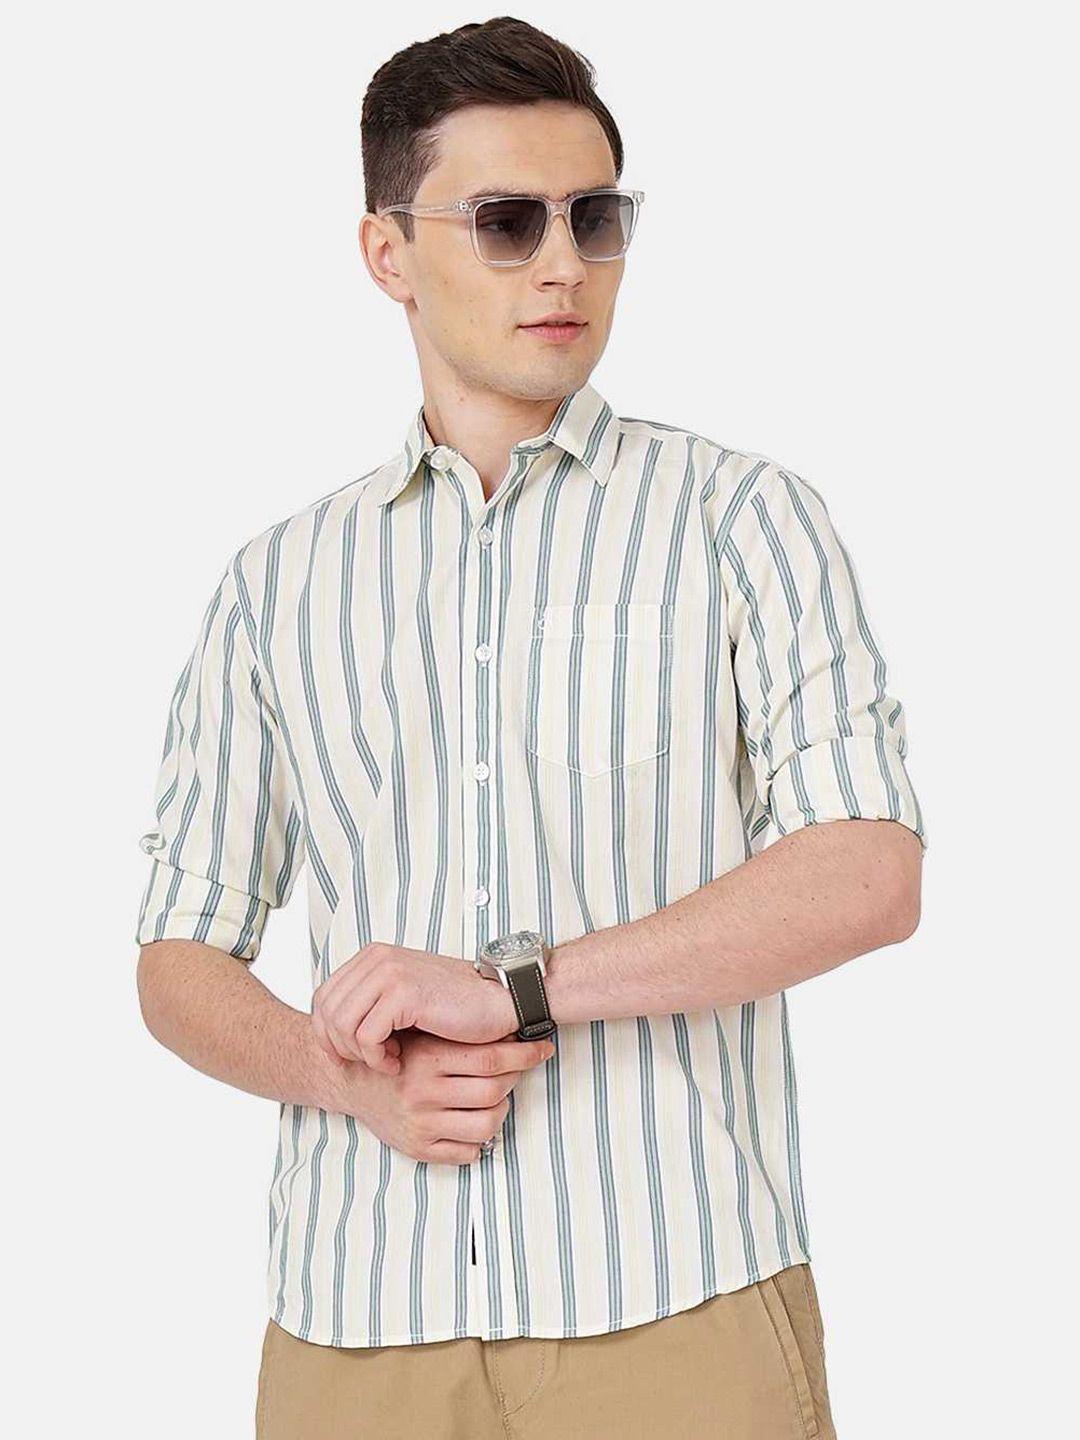 soratia-spread-collar-slim-fit-striped-casual-cotton-shirt